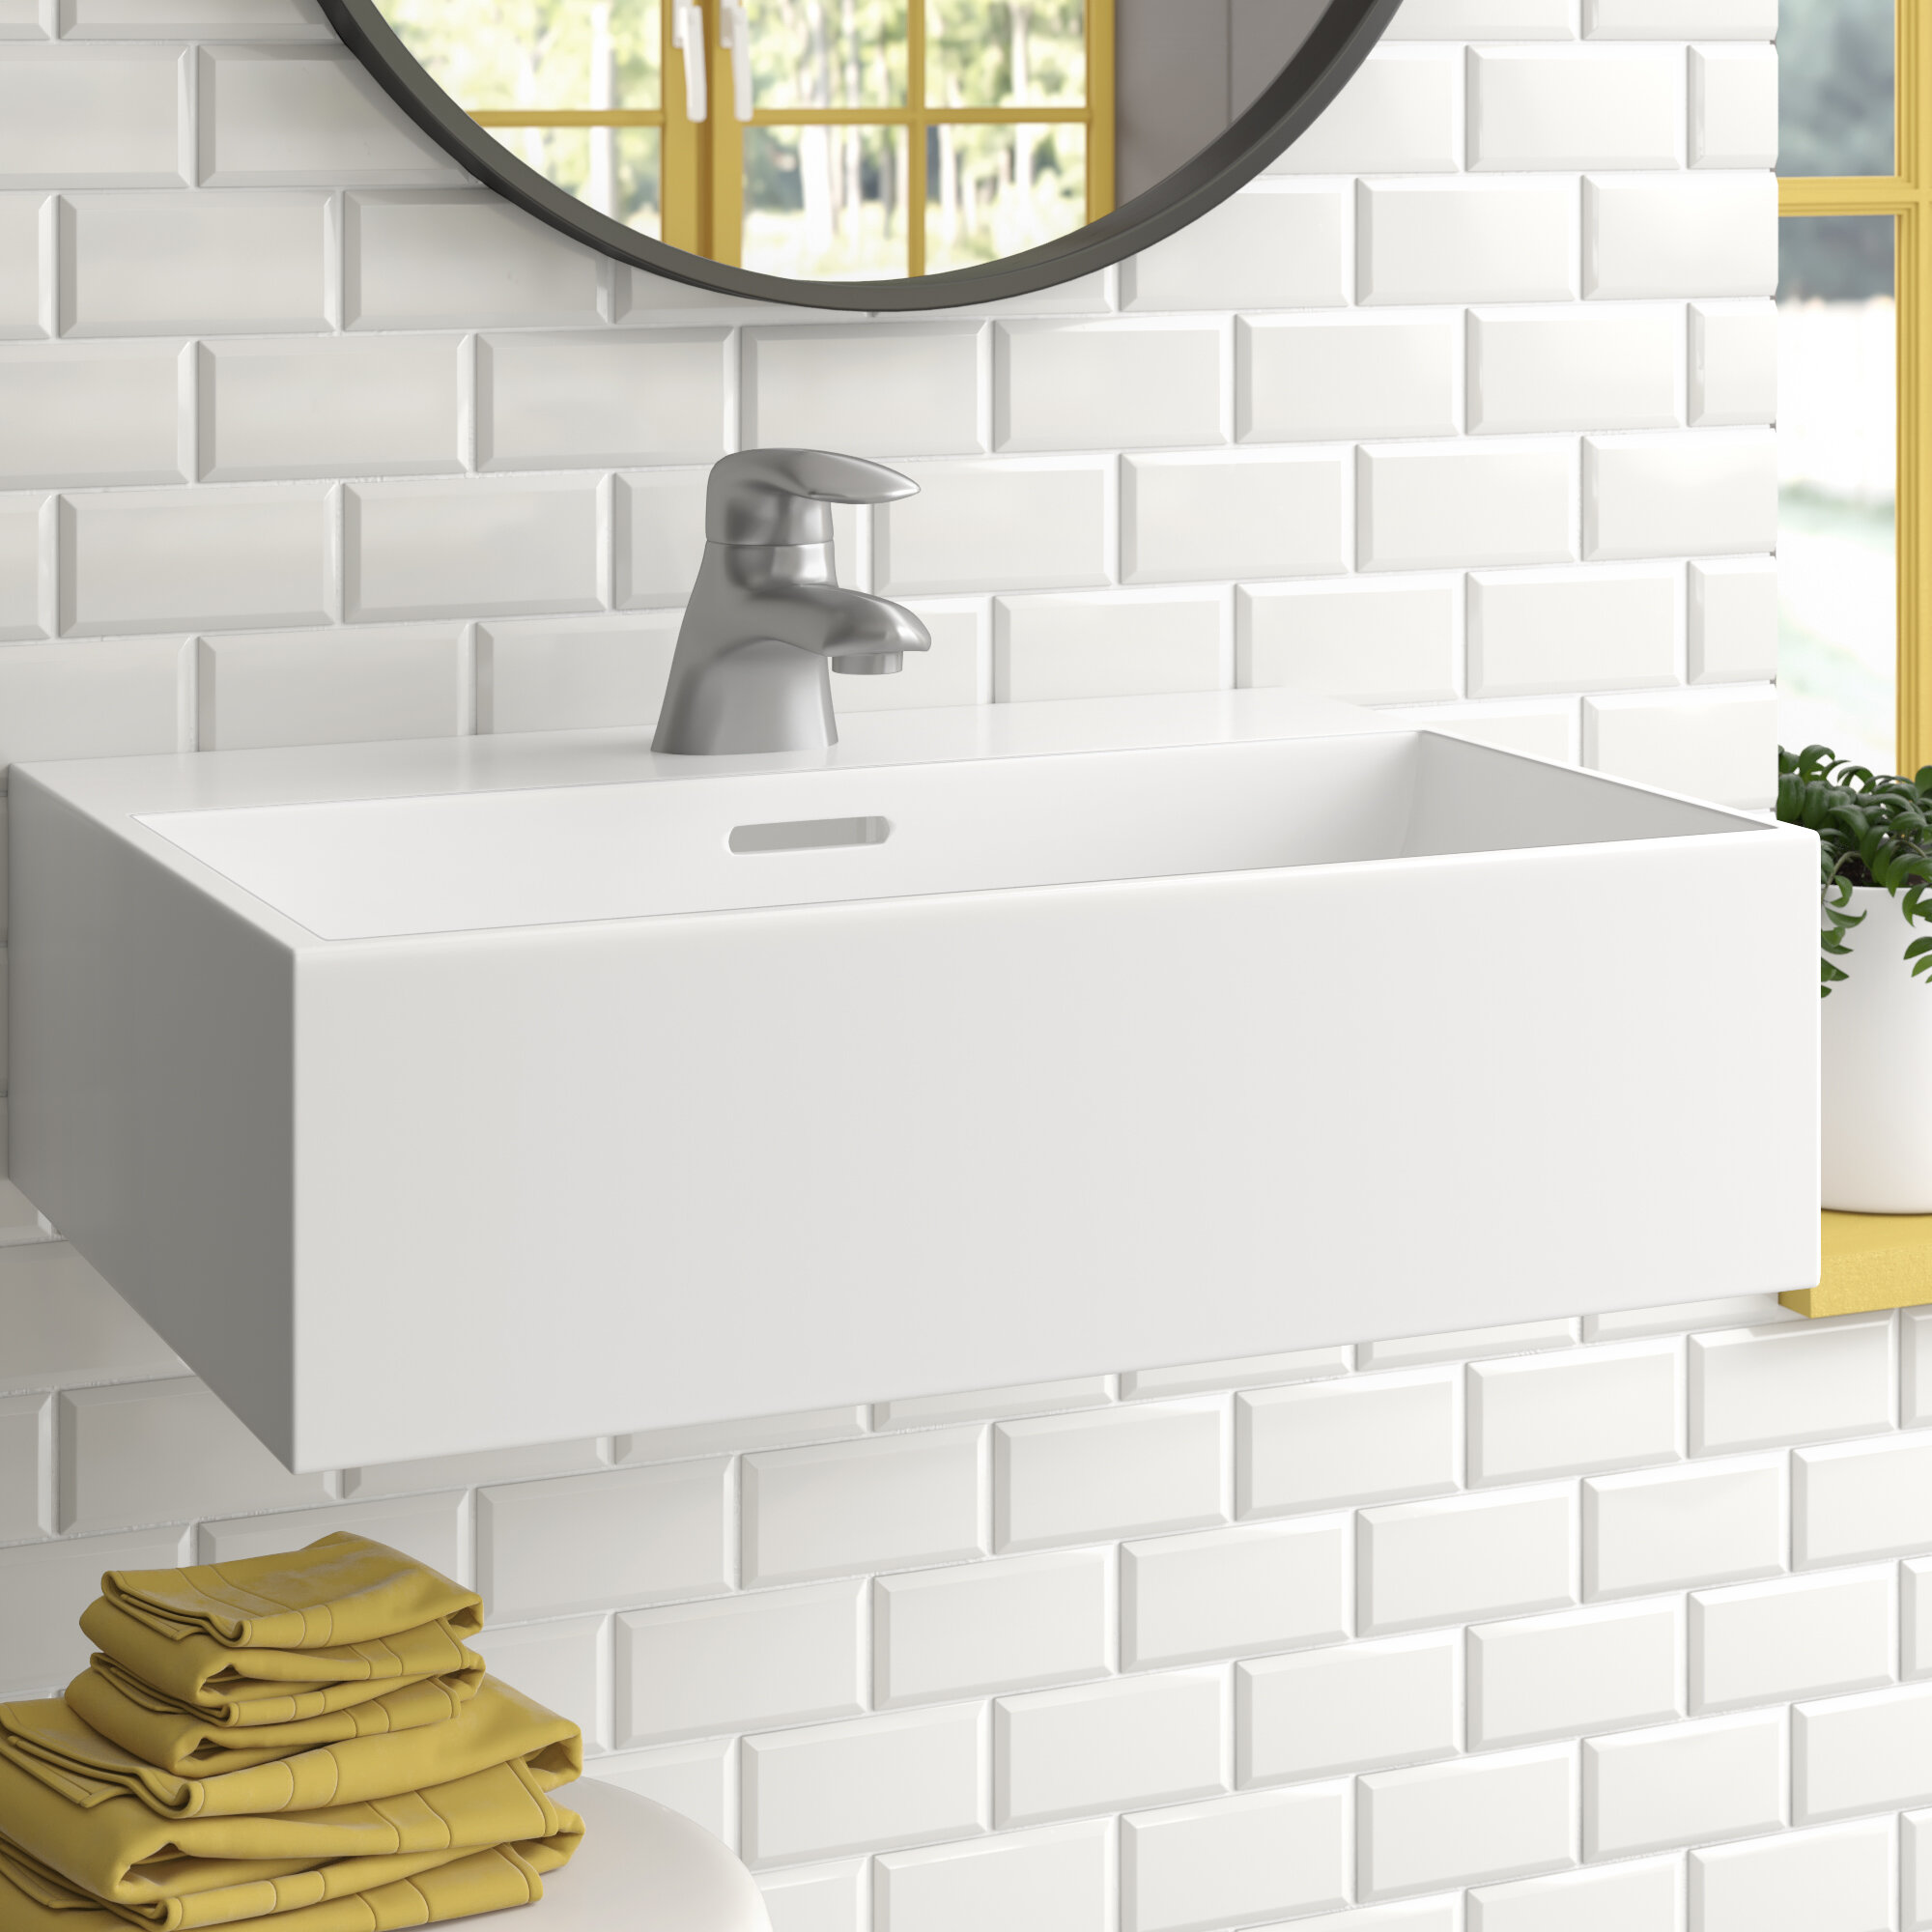 White Ceramic Bathroom Sink with Overflow Sink Bathroom Ceramic Basin Sink/Wash Basin/90 cm 